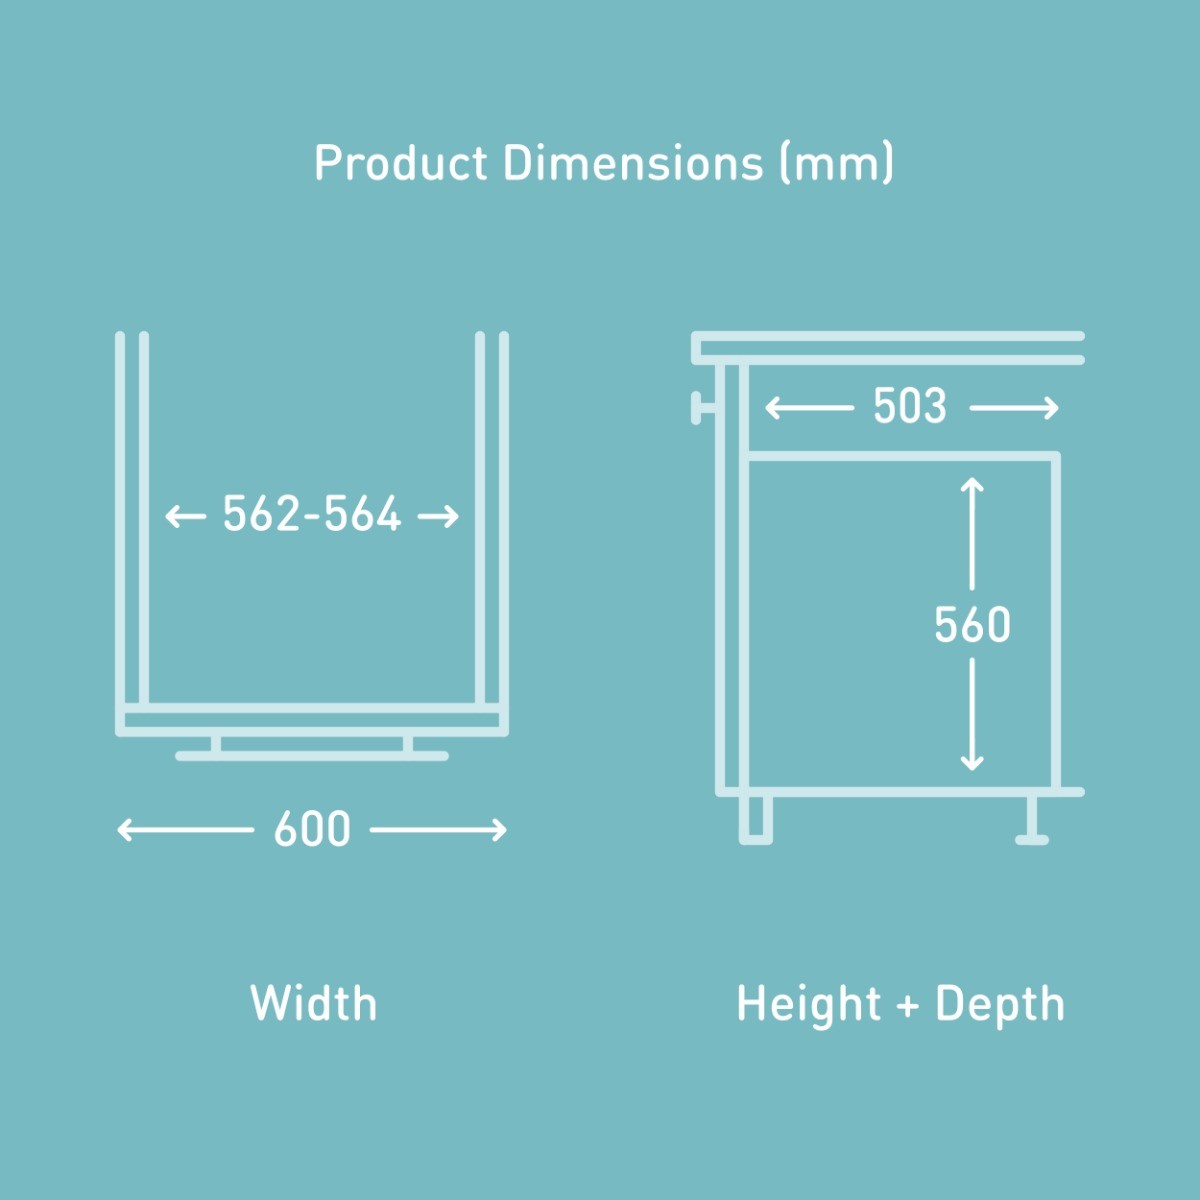 Fitting dimensions diagram for the Tecnoinox Premium Single Compartment 72L integrated kitchen bin